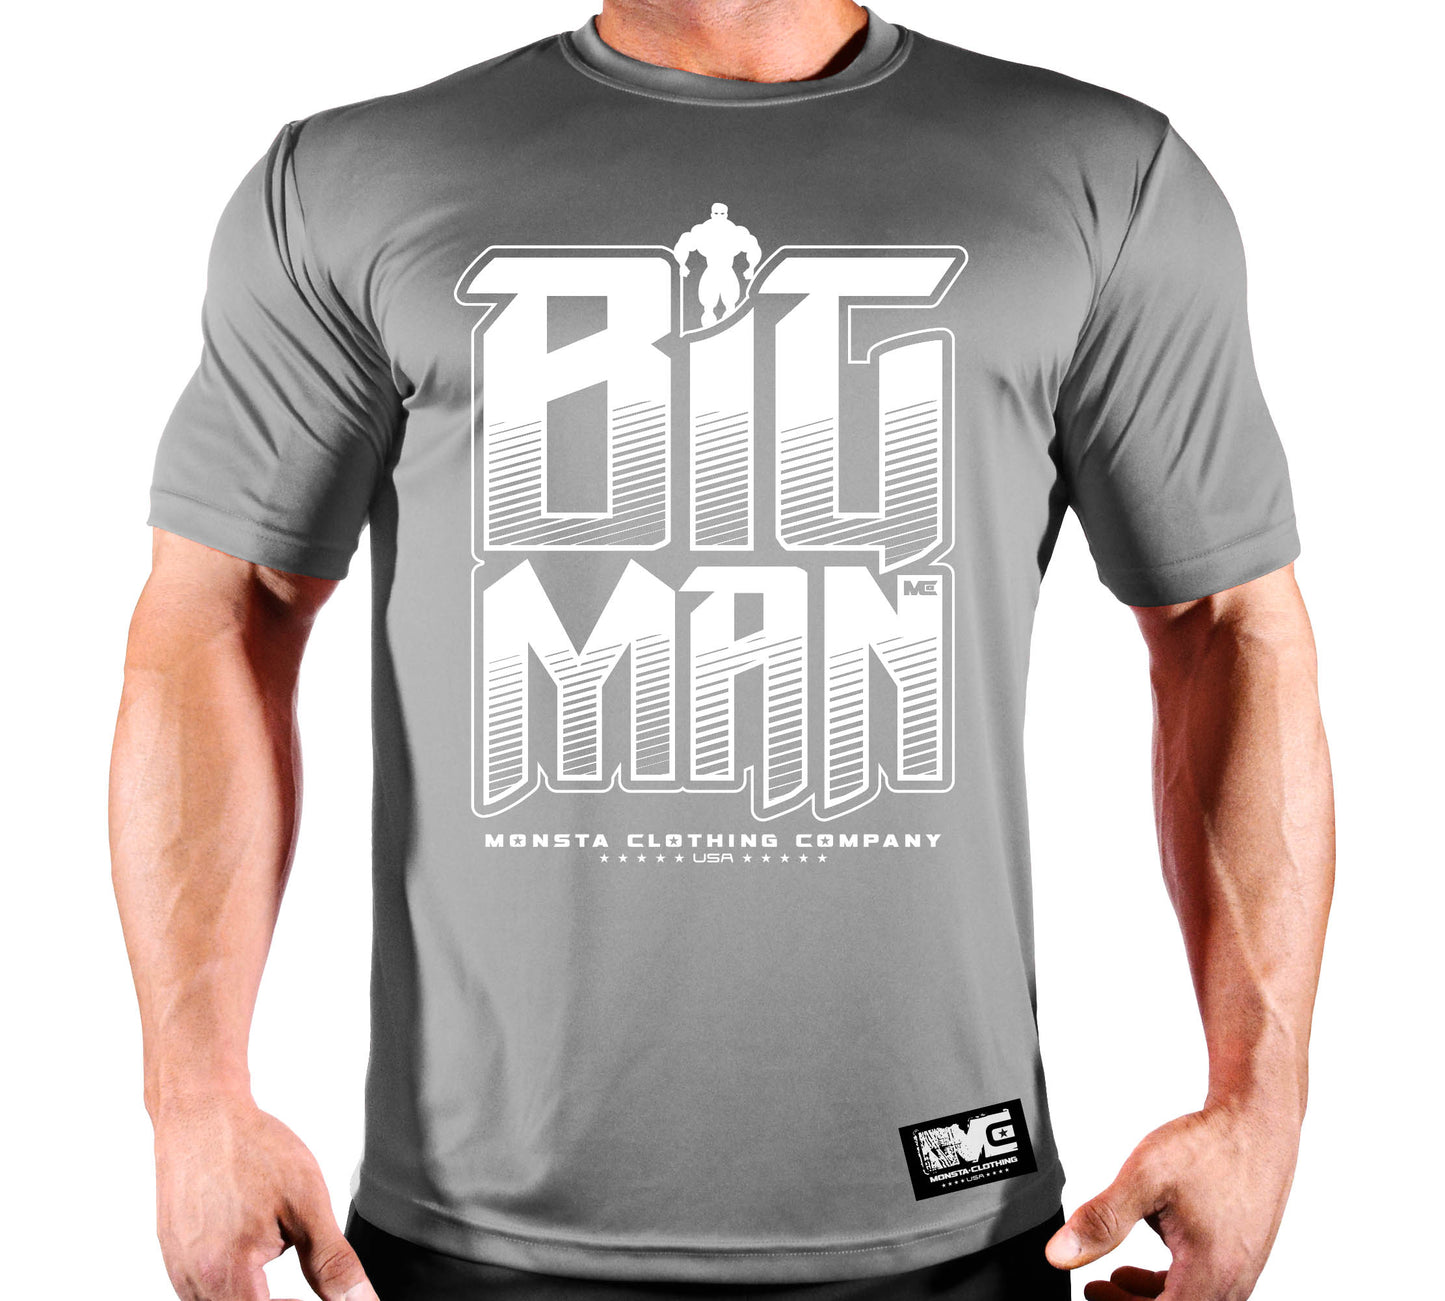 Big Man-60: White